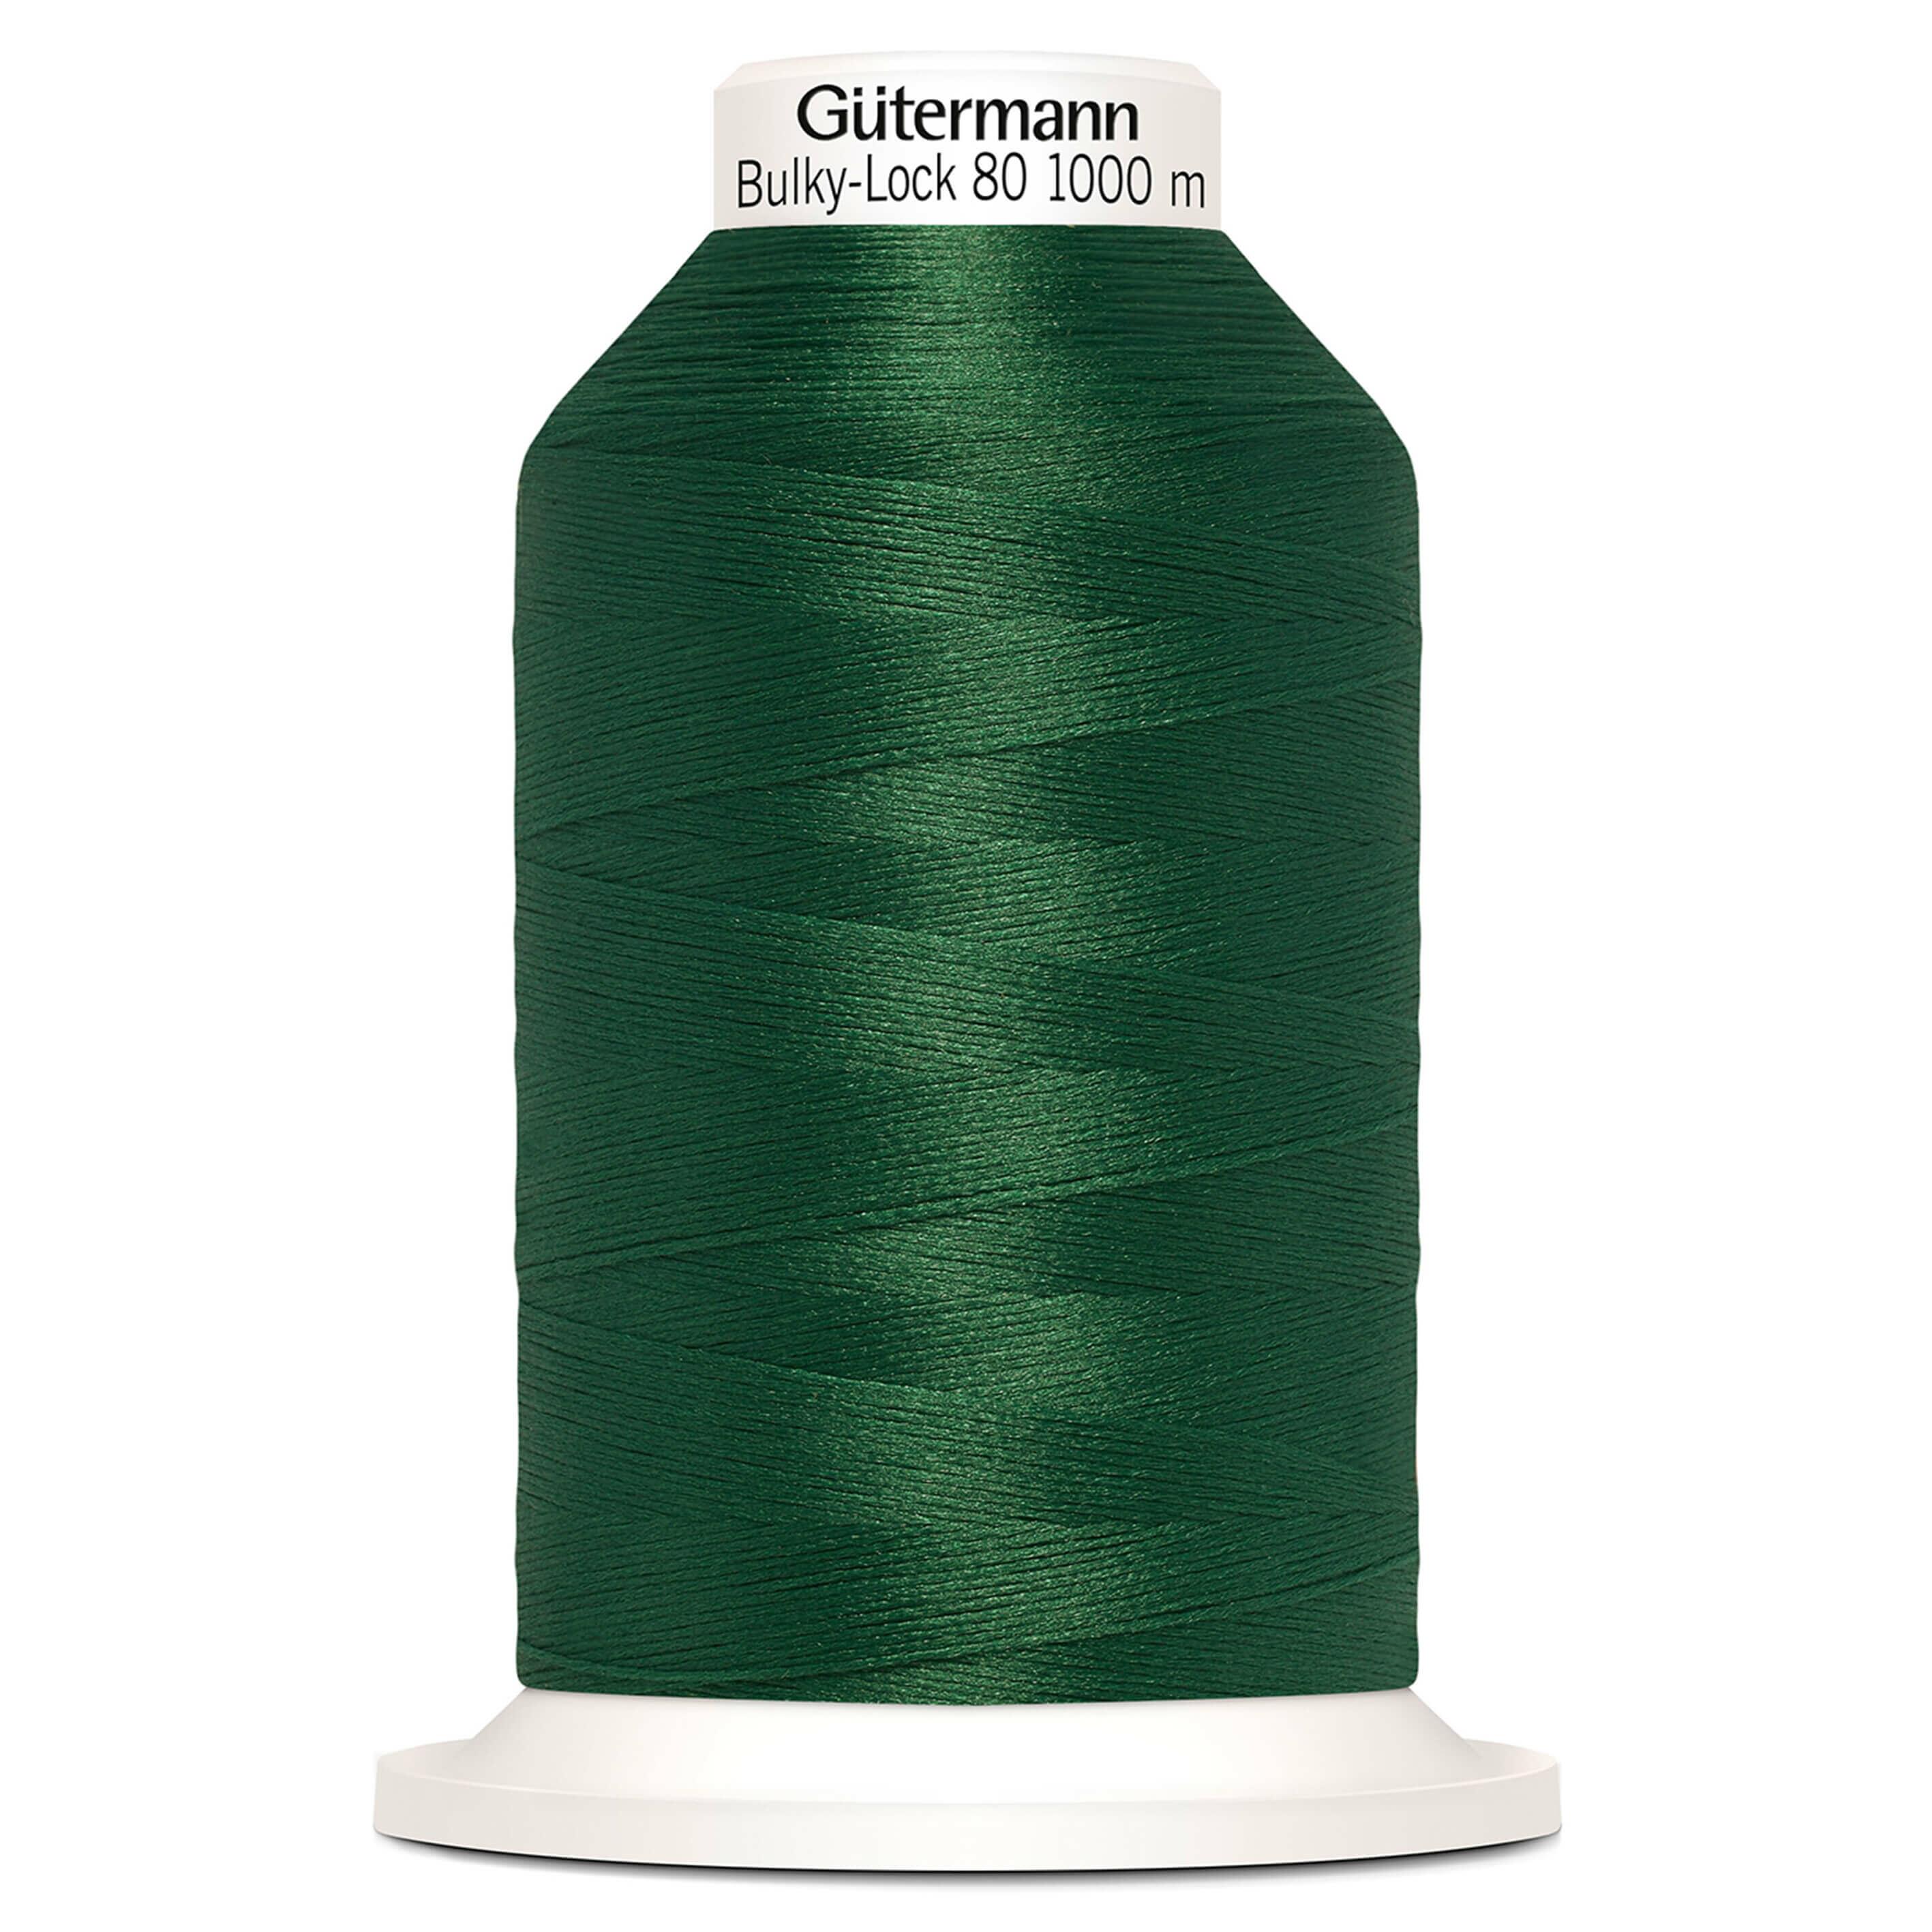 Gutermann Bulky Lock 80 overlocking thread in colour 340 Amazon Green